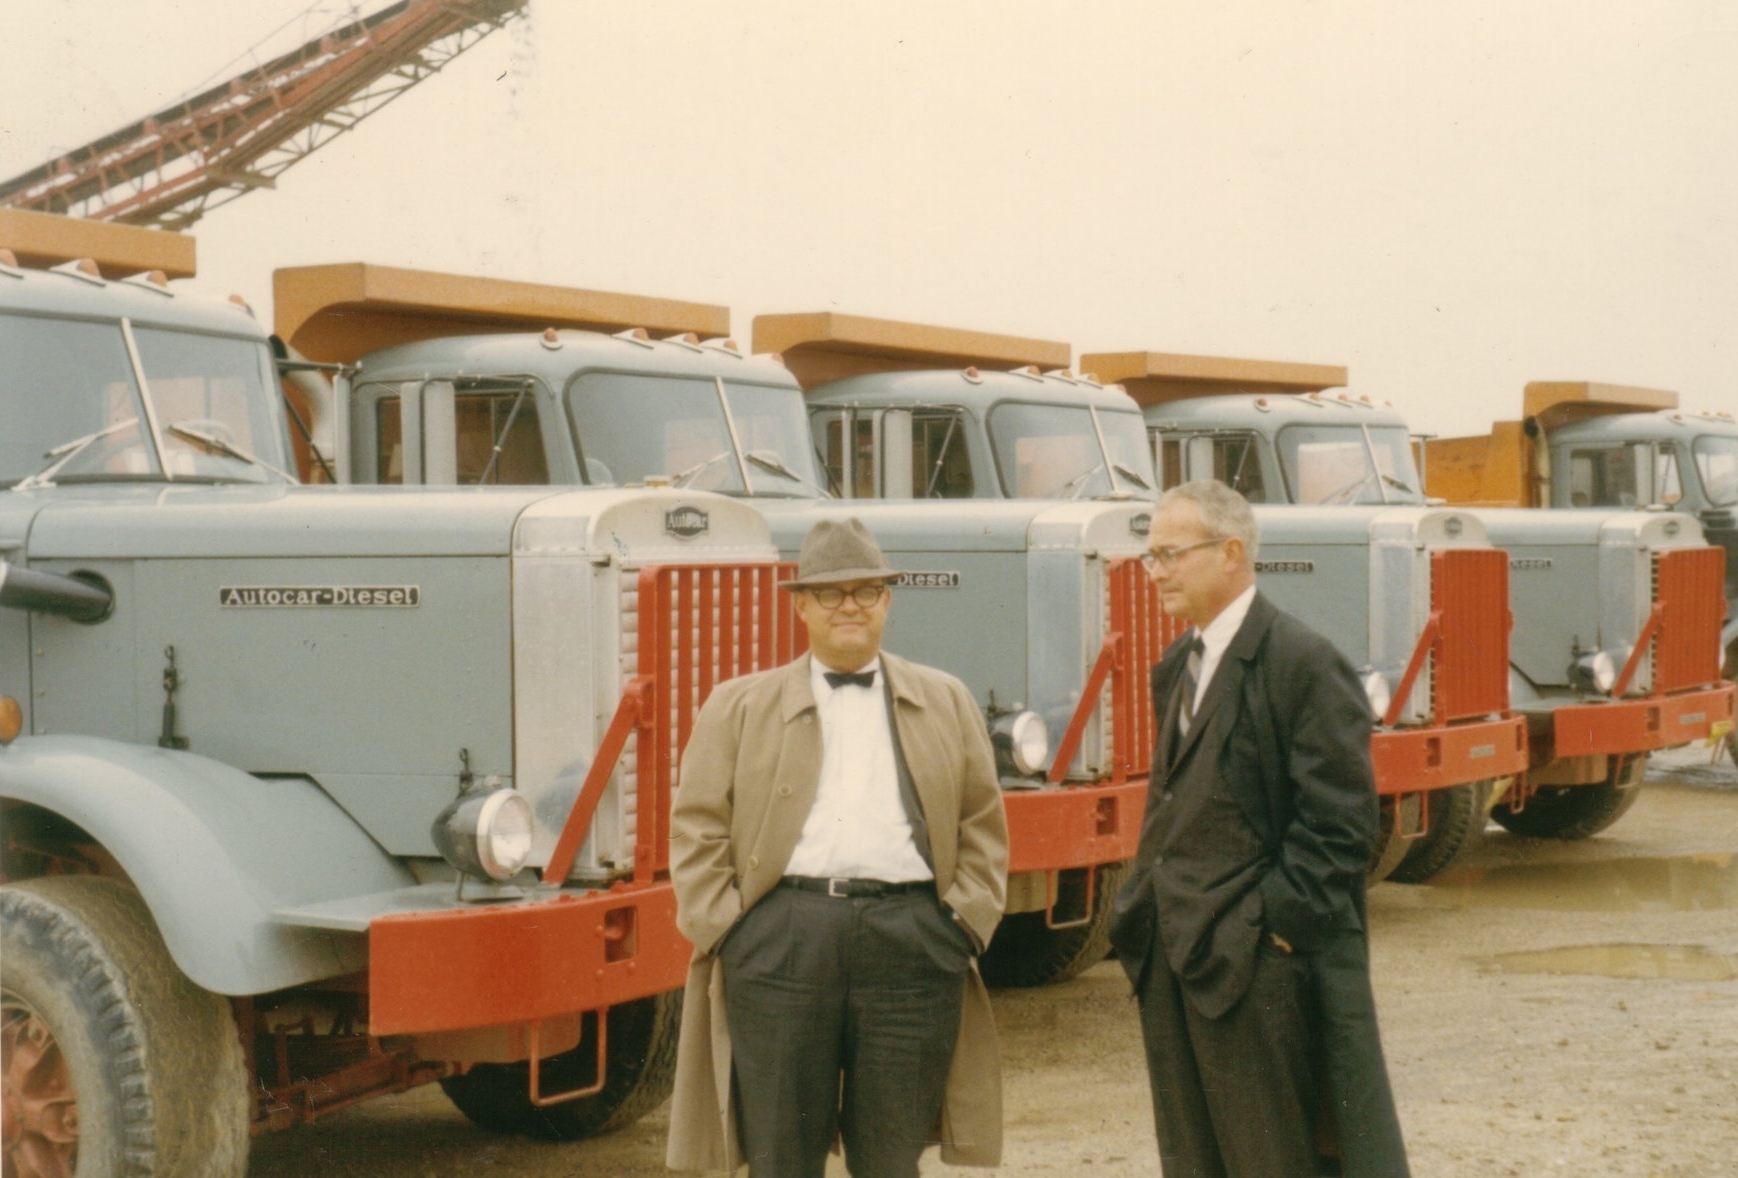 08-Rudy Kraemer & Autocar trucks.jpg